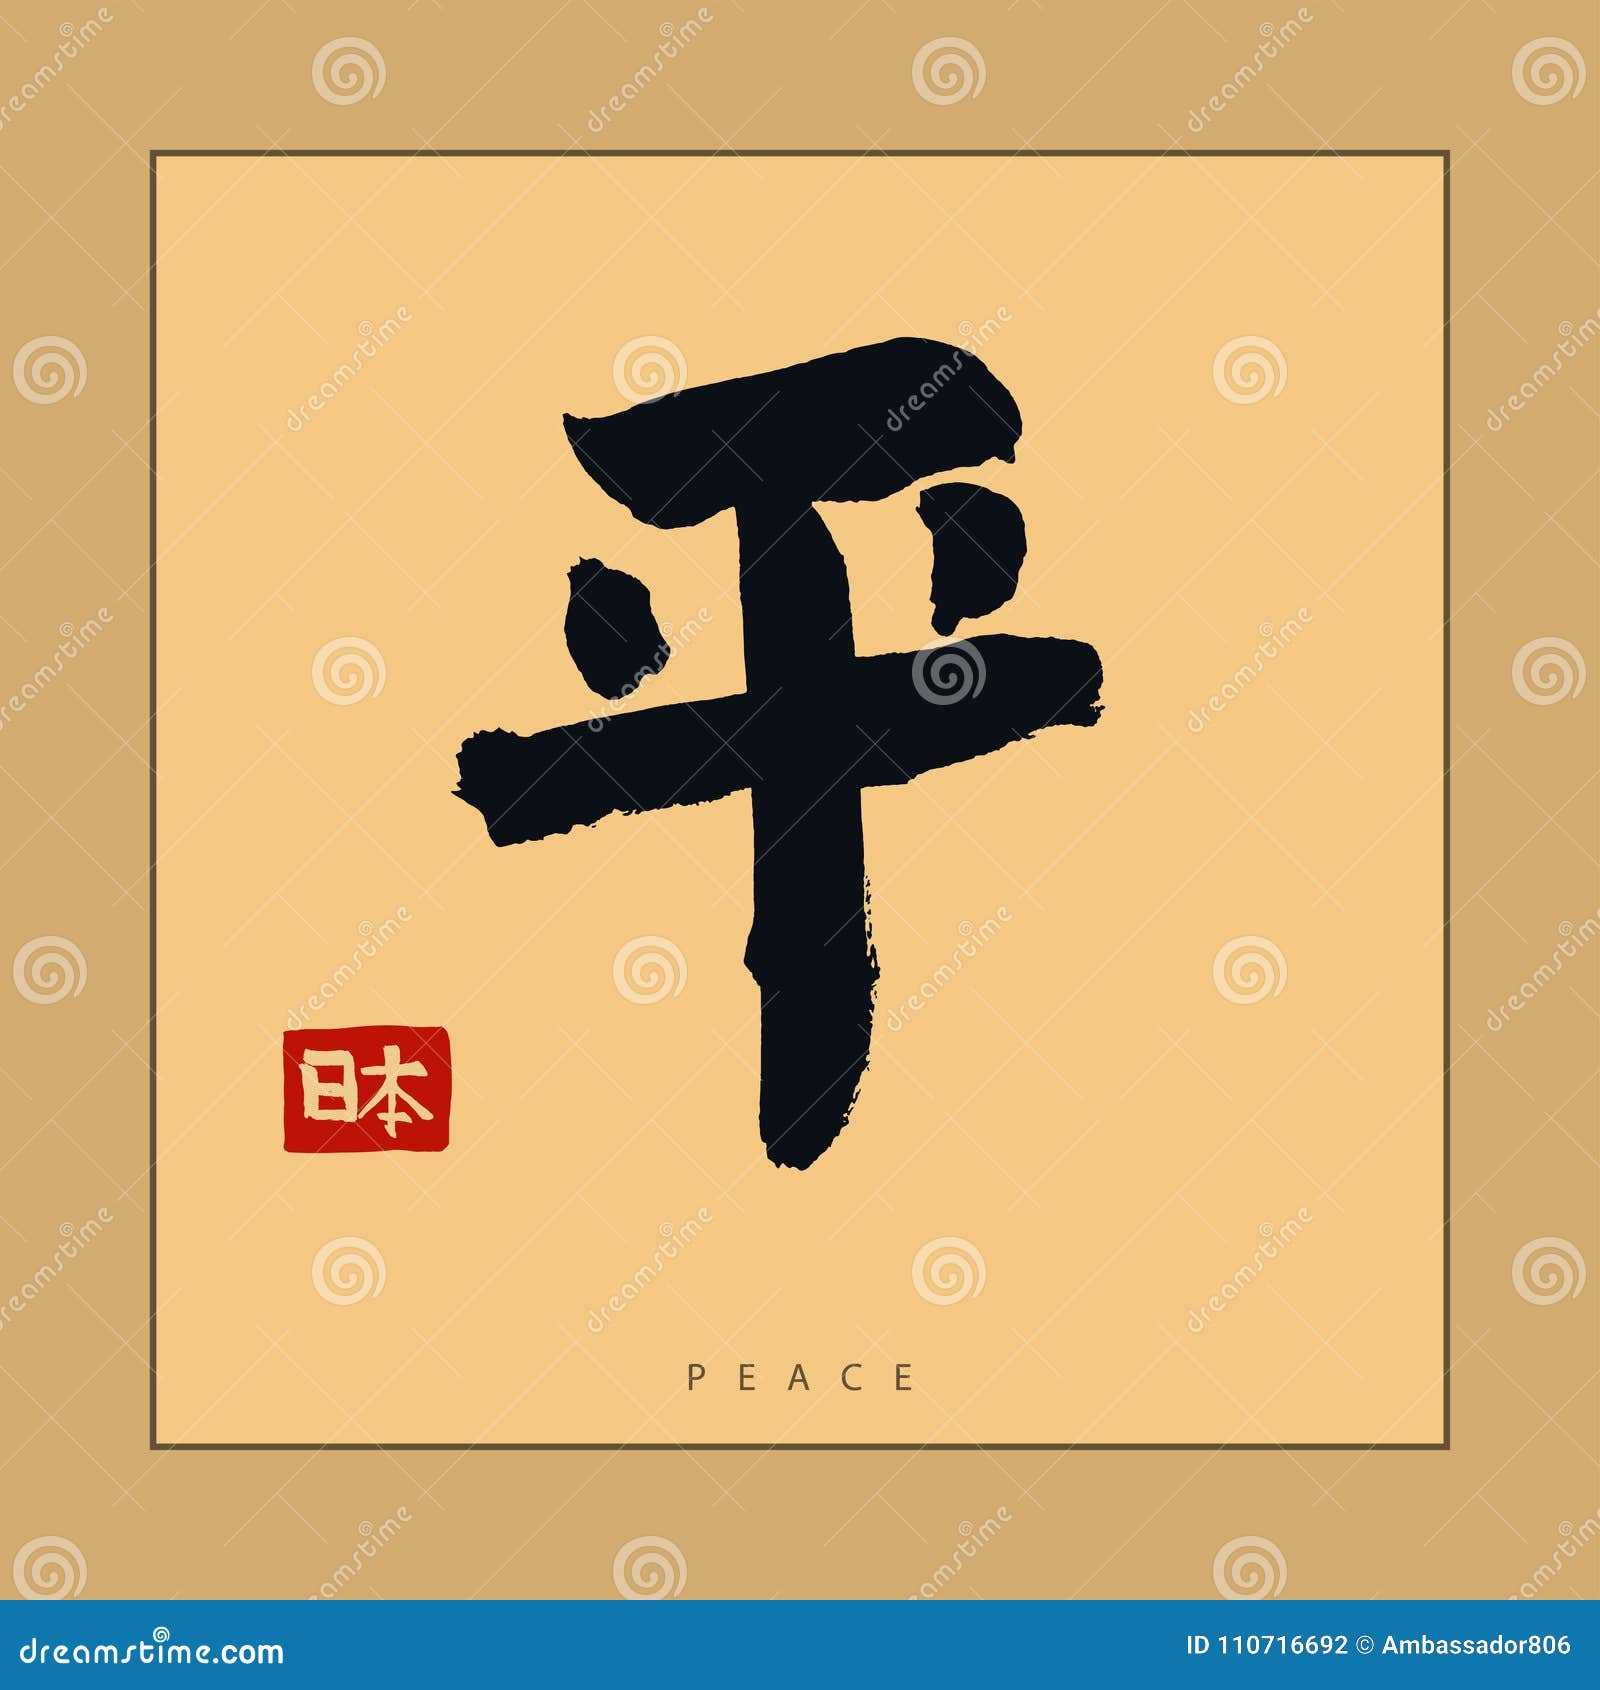 Japanese Peace Symbol Stock Illustrations 2 9 Japanese Peace Symbol Stock Illustrations Vectors Clipart Dreamstime